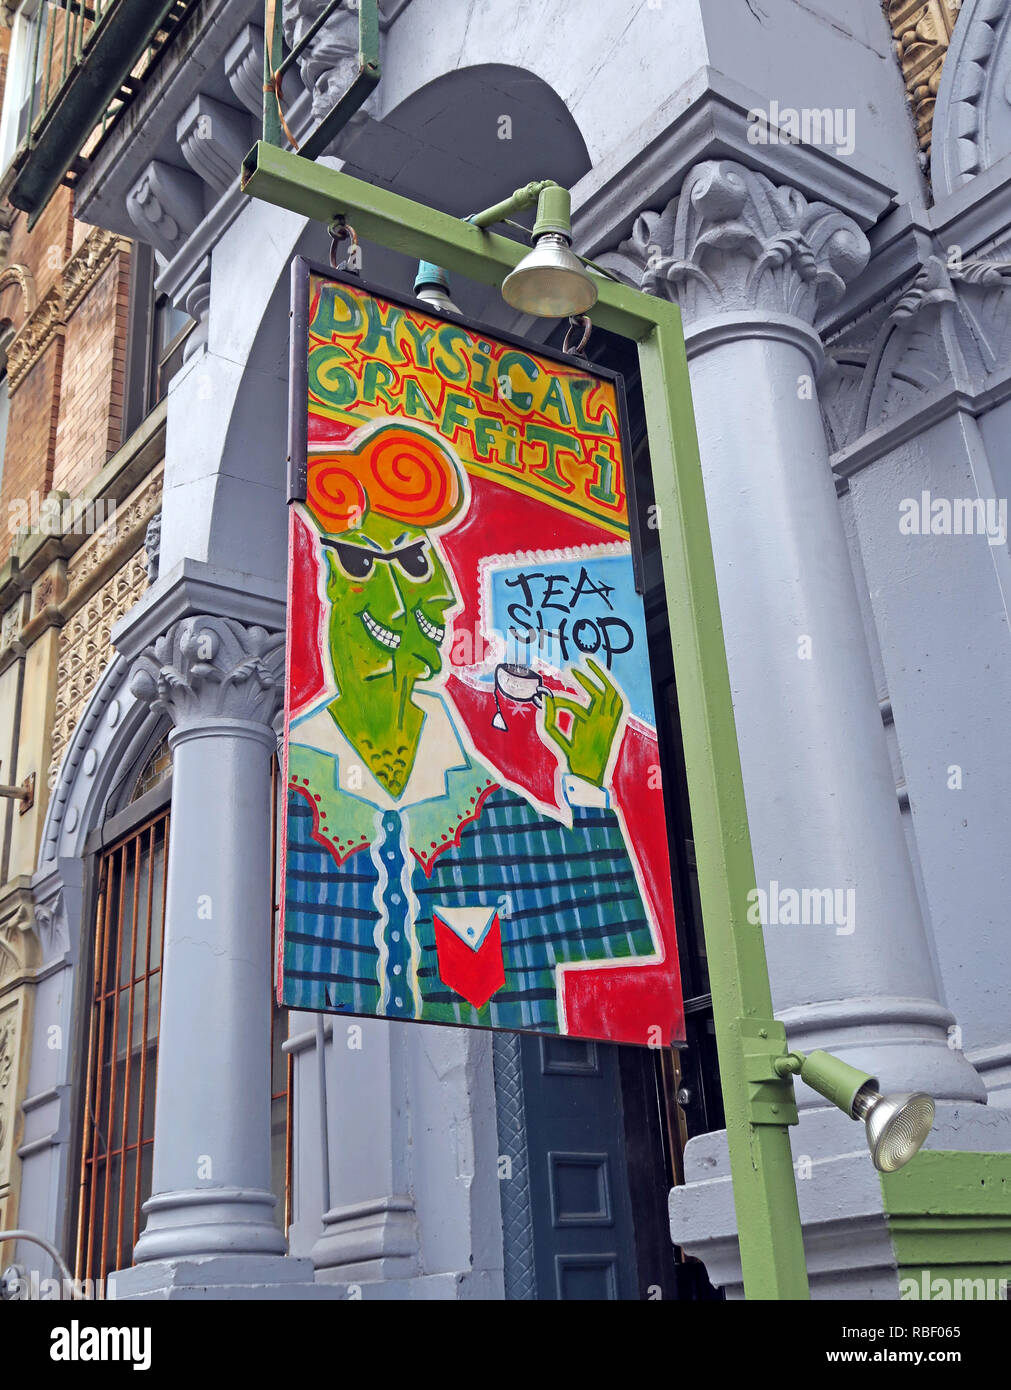 Physical Graffiti Tee Shop, St Marks, Graffitea, East Village, Manhattan, New York City, NY, USA Stockfoto